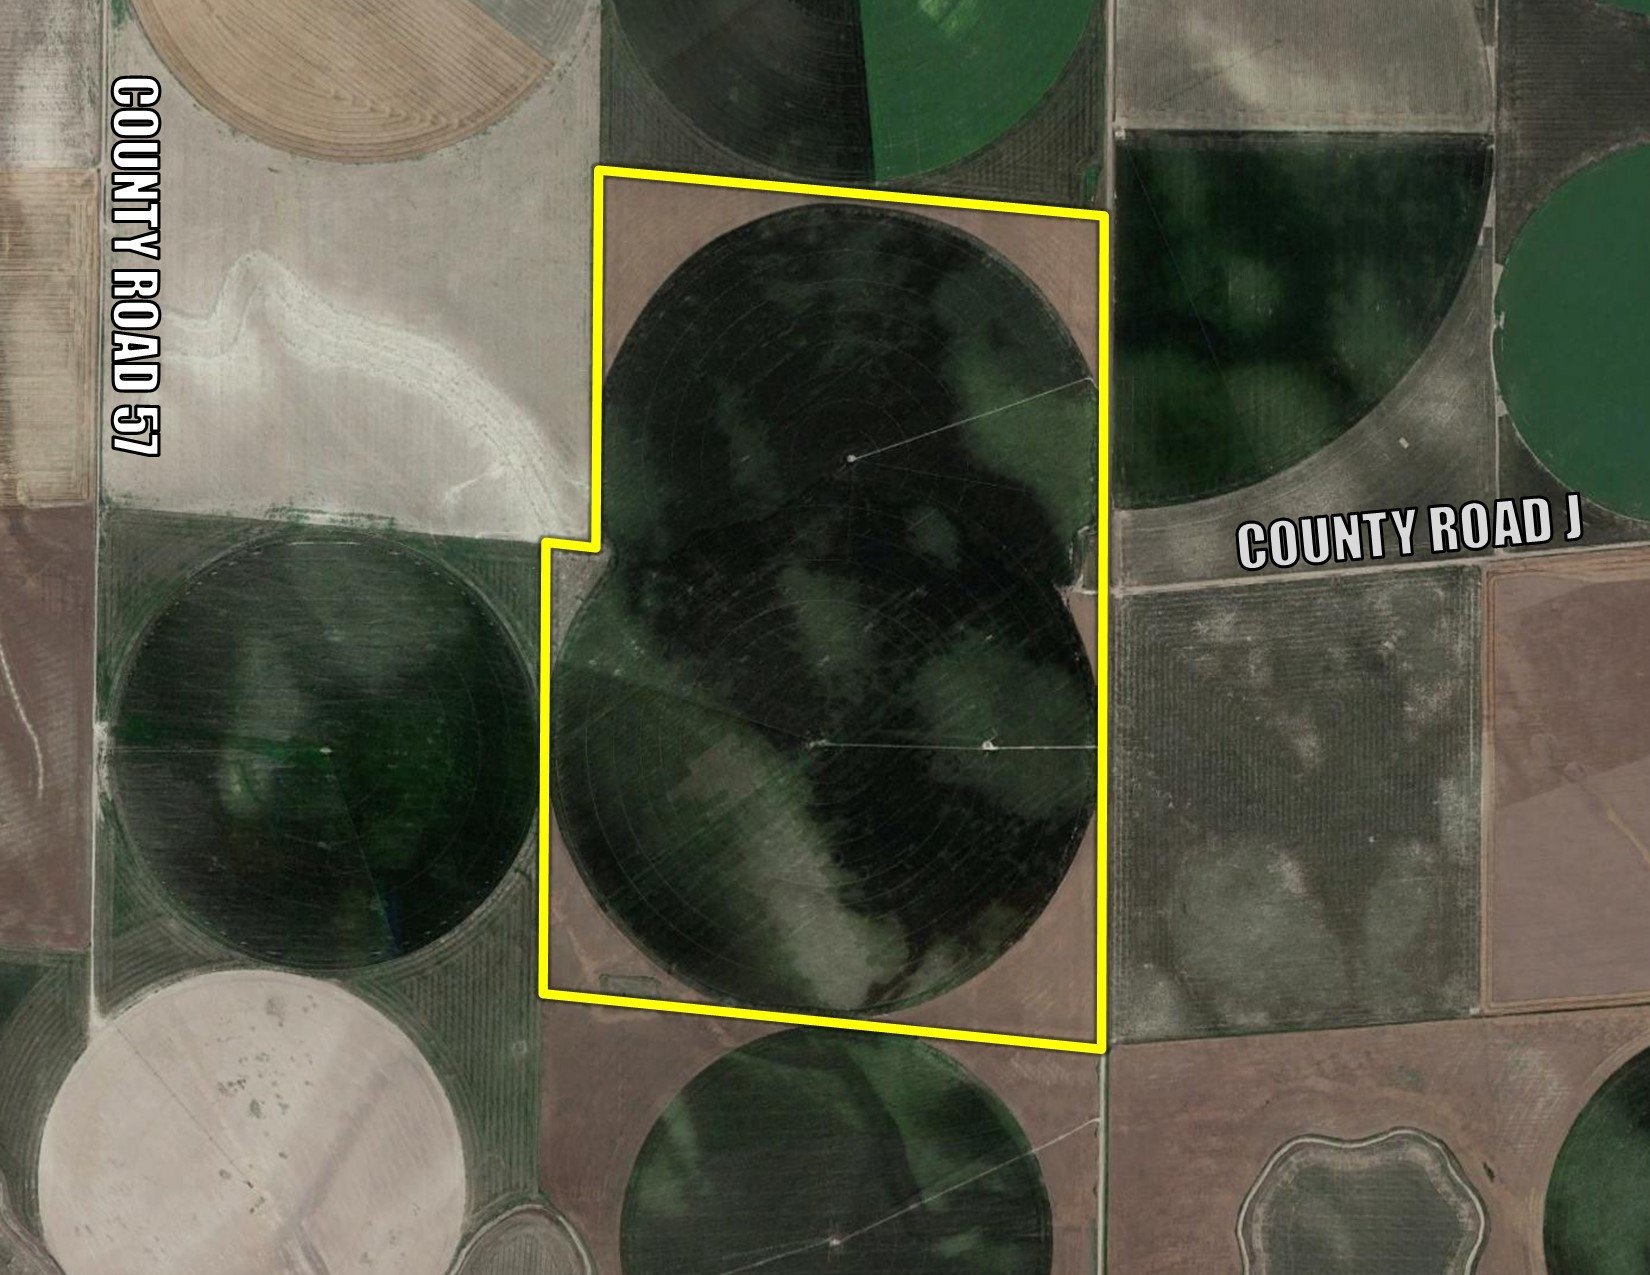 land-kit-carson-county-colorado-363-acres-listing-number-17102-16138-photo-land-kit-carson-county-colorado-363-acres-listing-number-16138-google-close-edit-0jpg-0.jpg